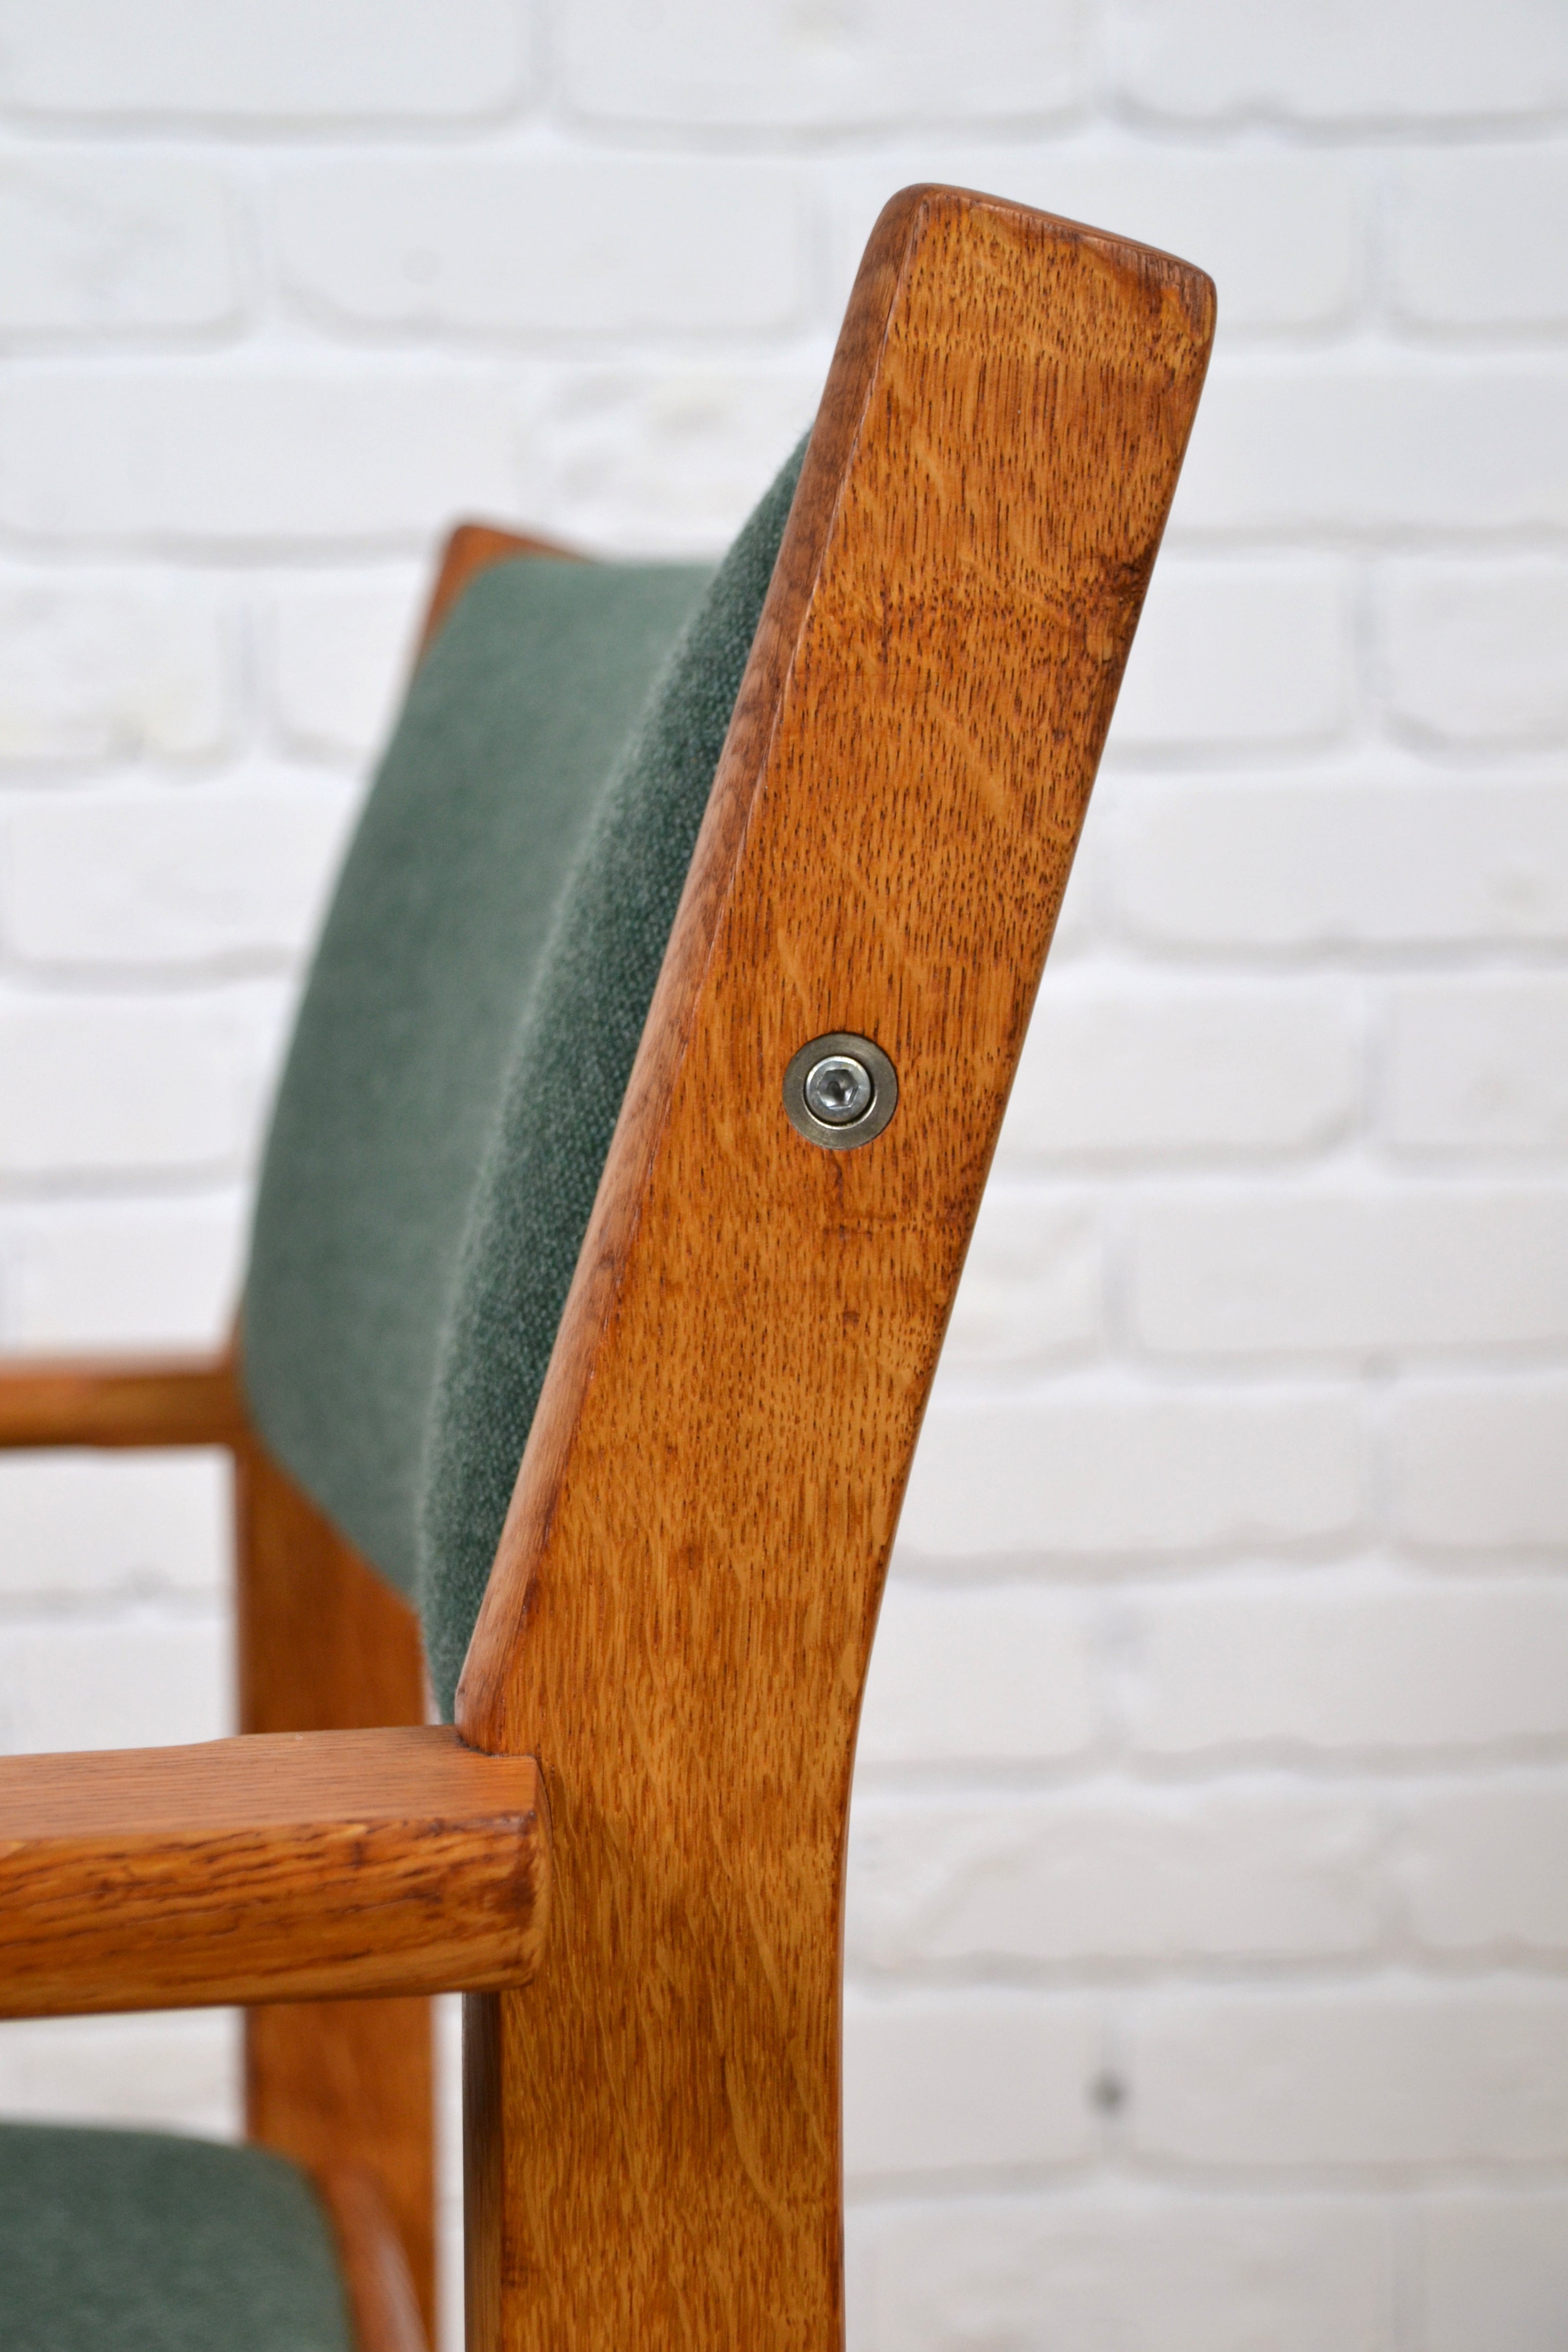 Vintage Danish Oak armchair by Hans J Wegner